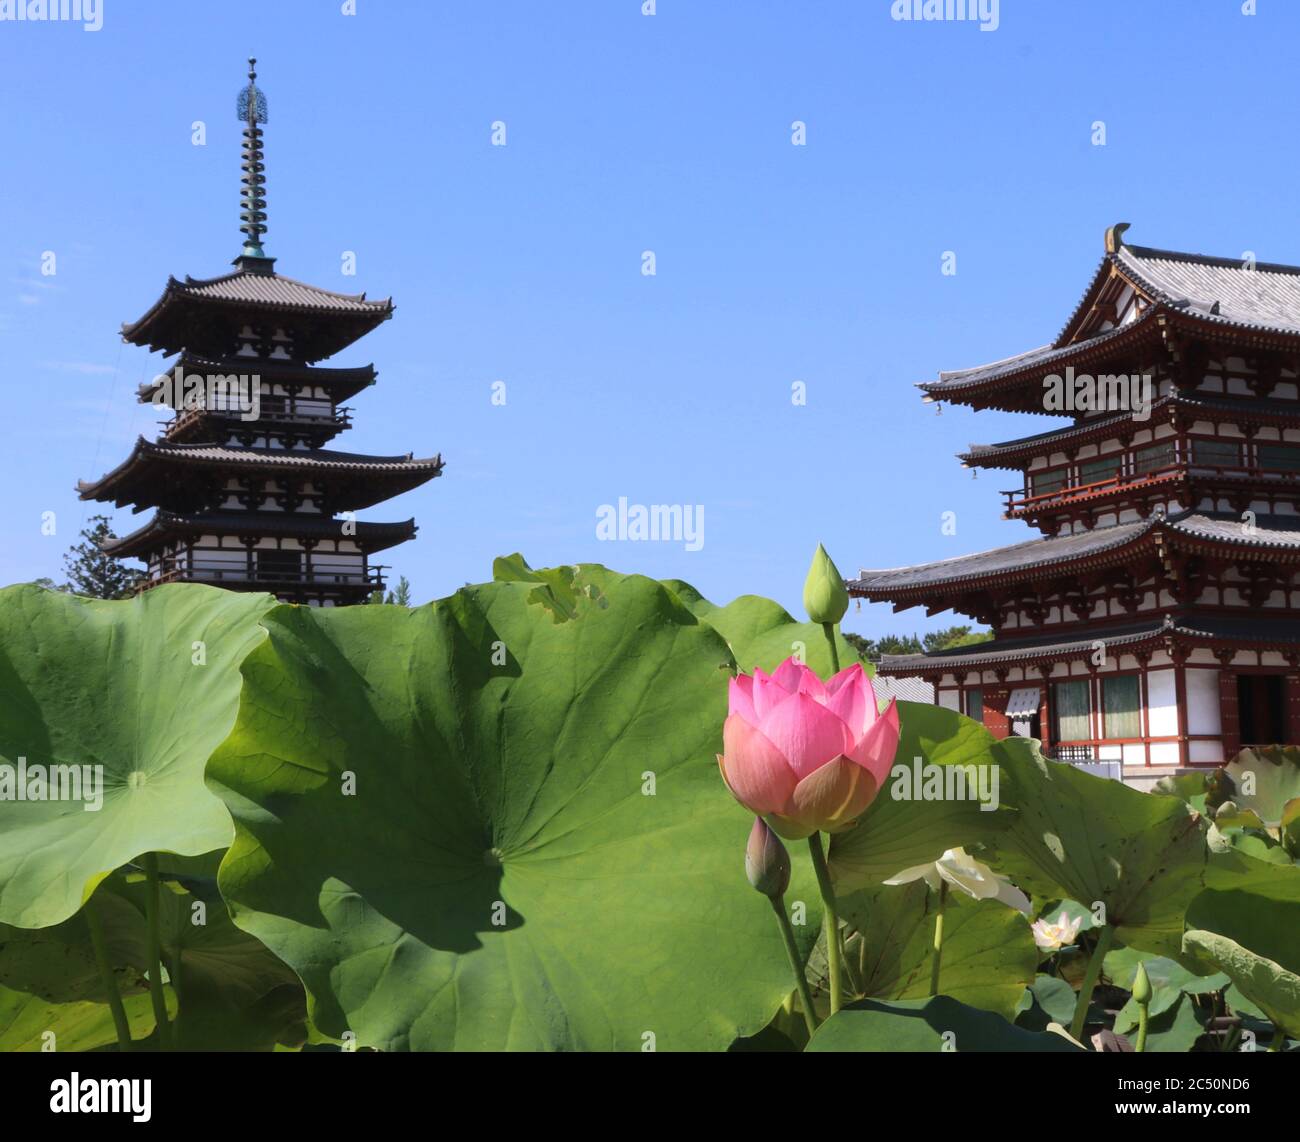 Japanese ancient Buddhist temple with five storey pagoda and lotus flower (World Heritage Yakushiji Temple in Nara) Stock Photo